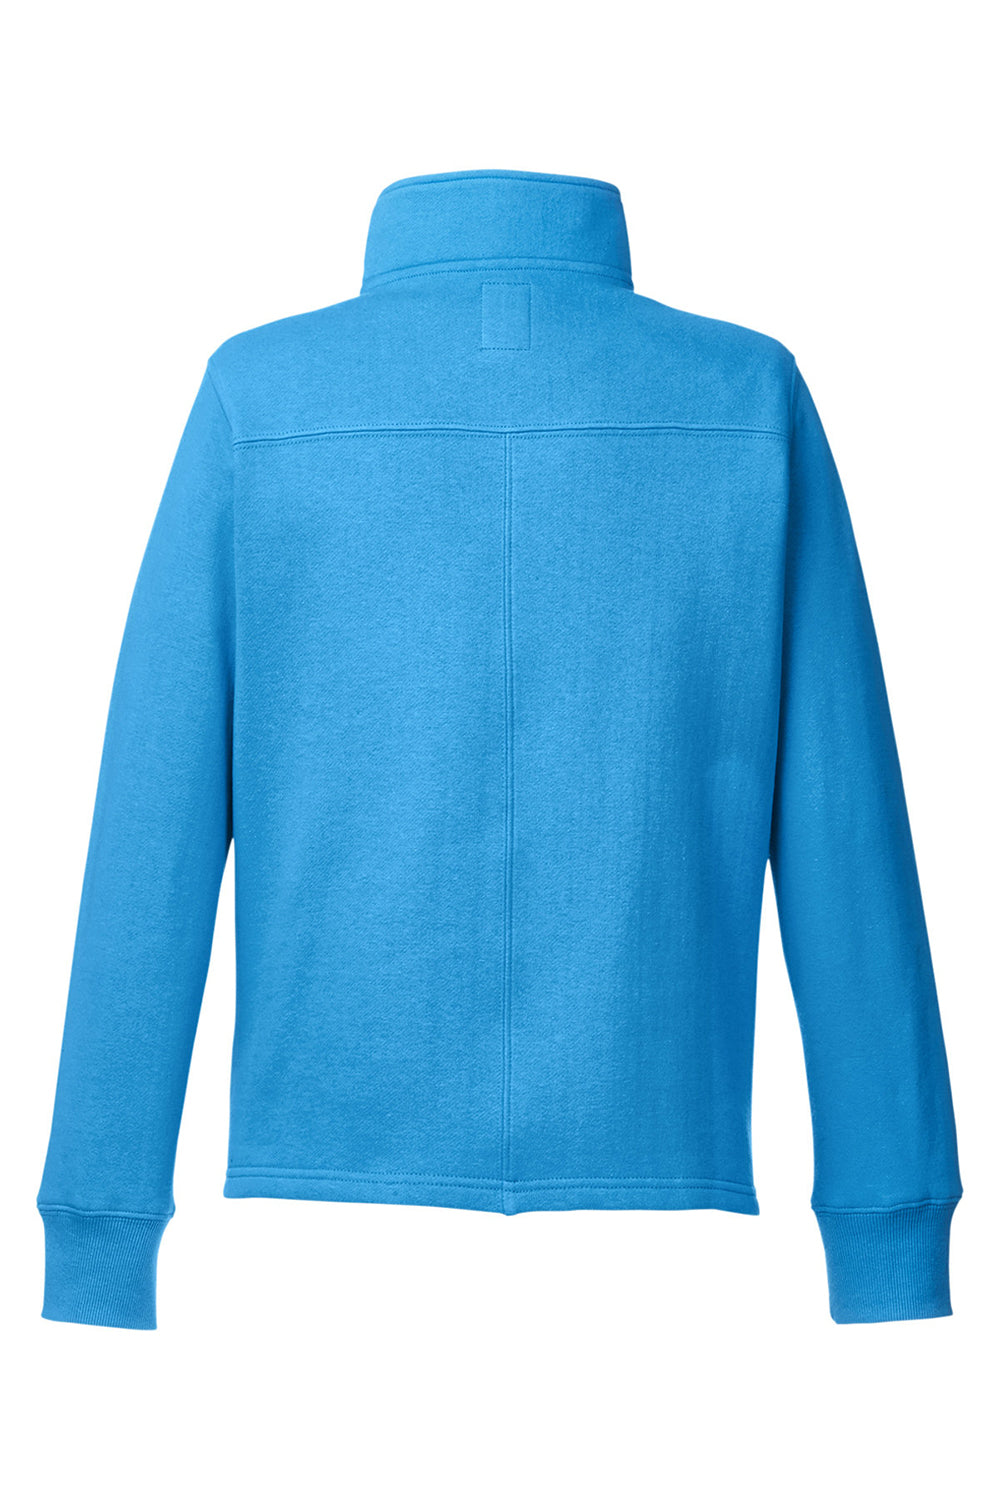 Nautica N17397 Womens Anchor Fleece 1/4 Zip Sweatshirt Azure Blue Flat Back